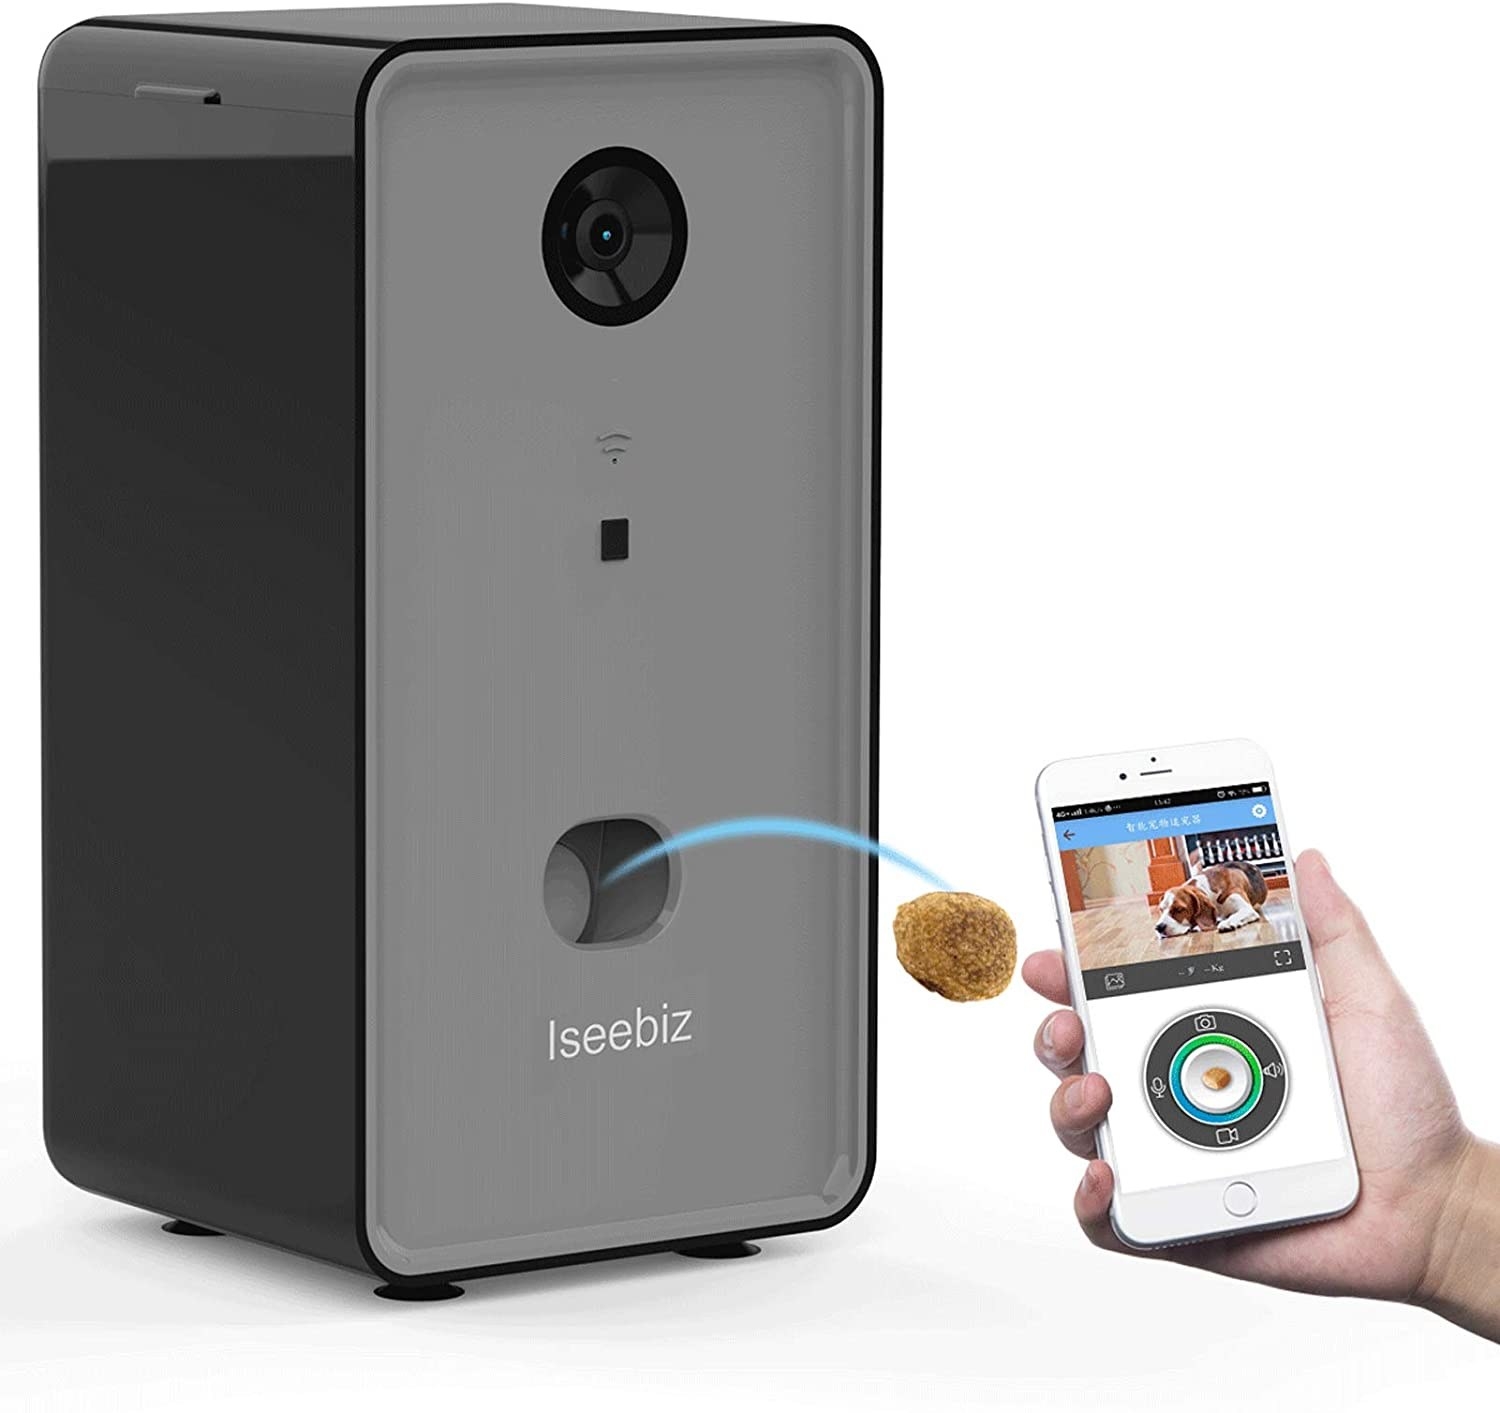 the black Iseebiz smart pet camera and treat dispenser